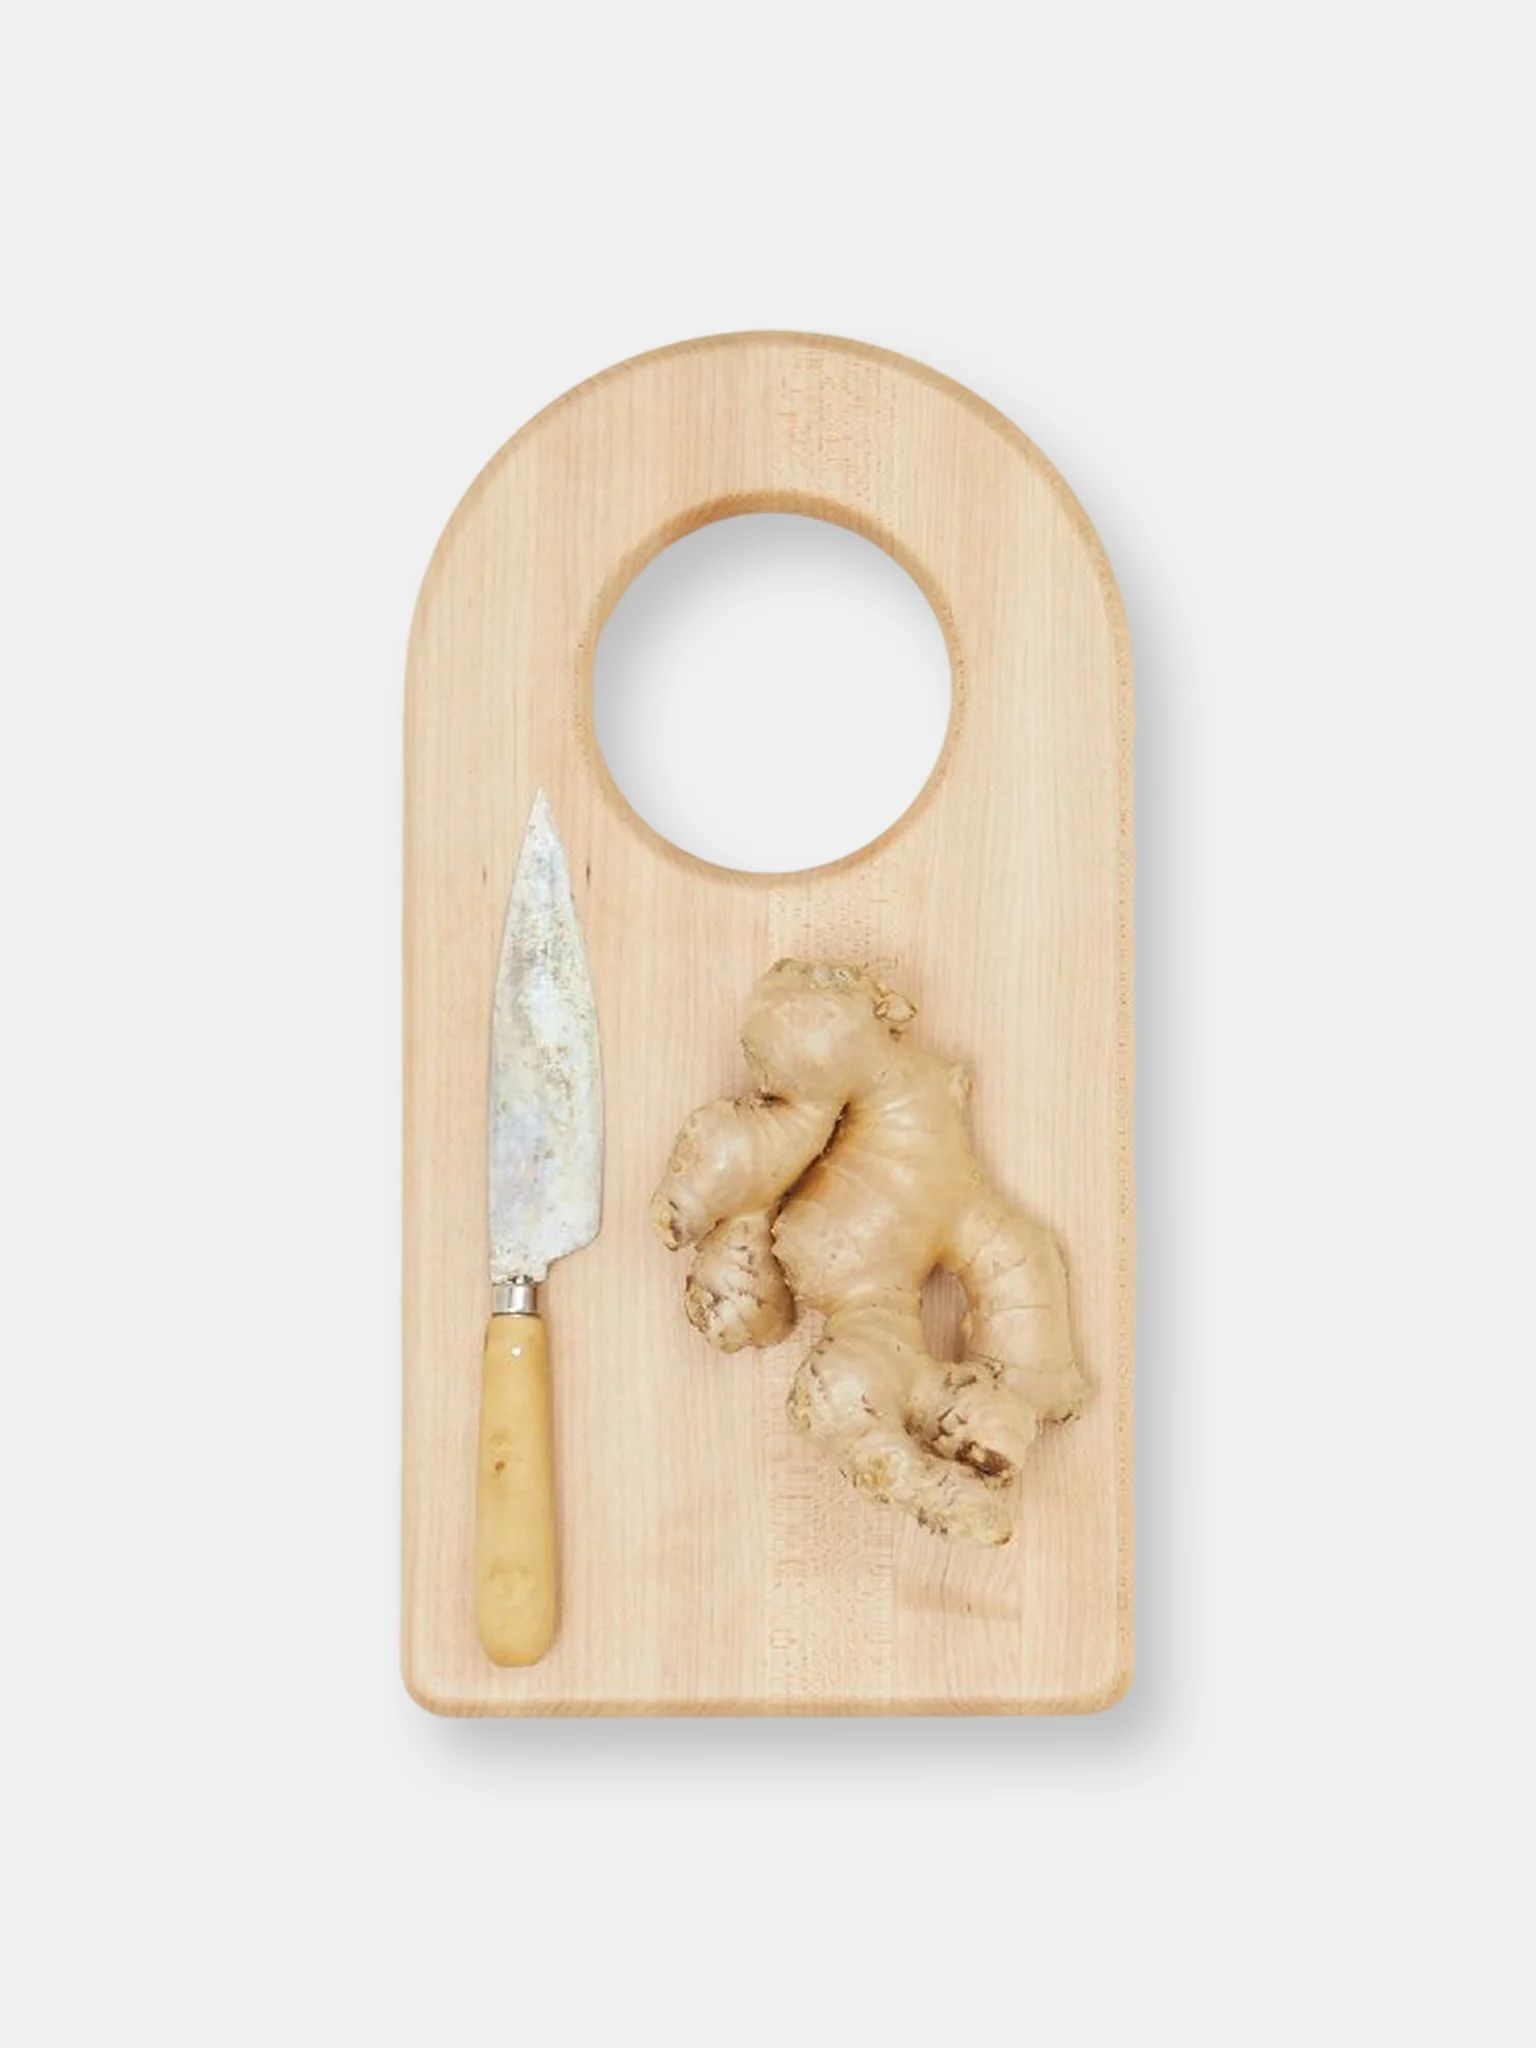 Simple Wood Kitchen Accessories - Arch Cutting Board | Verishop